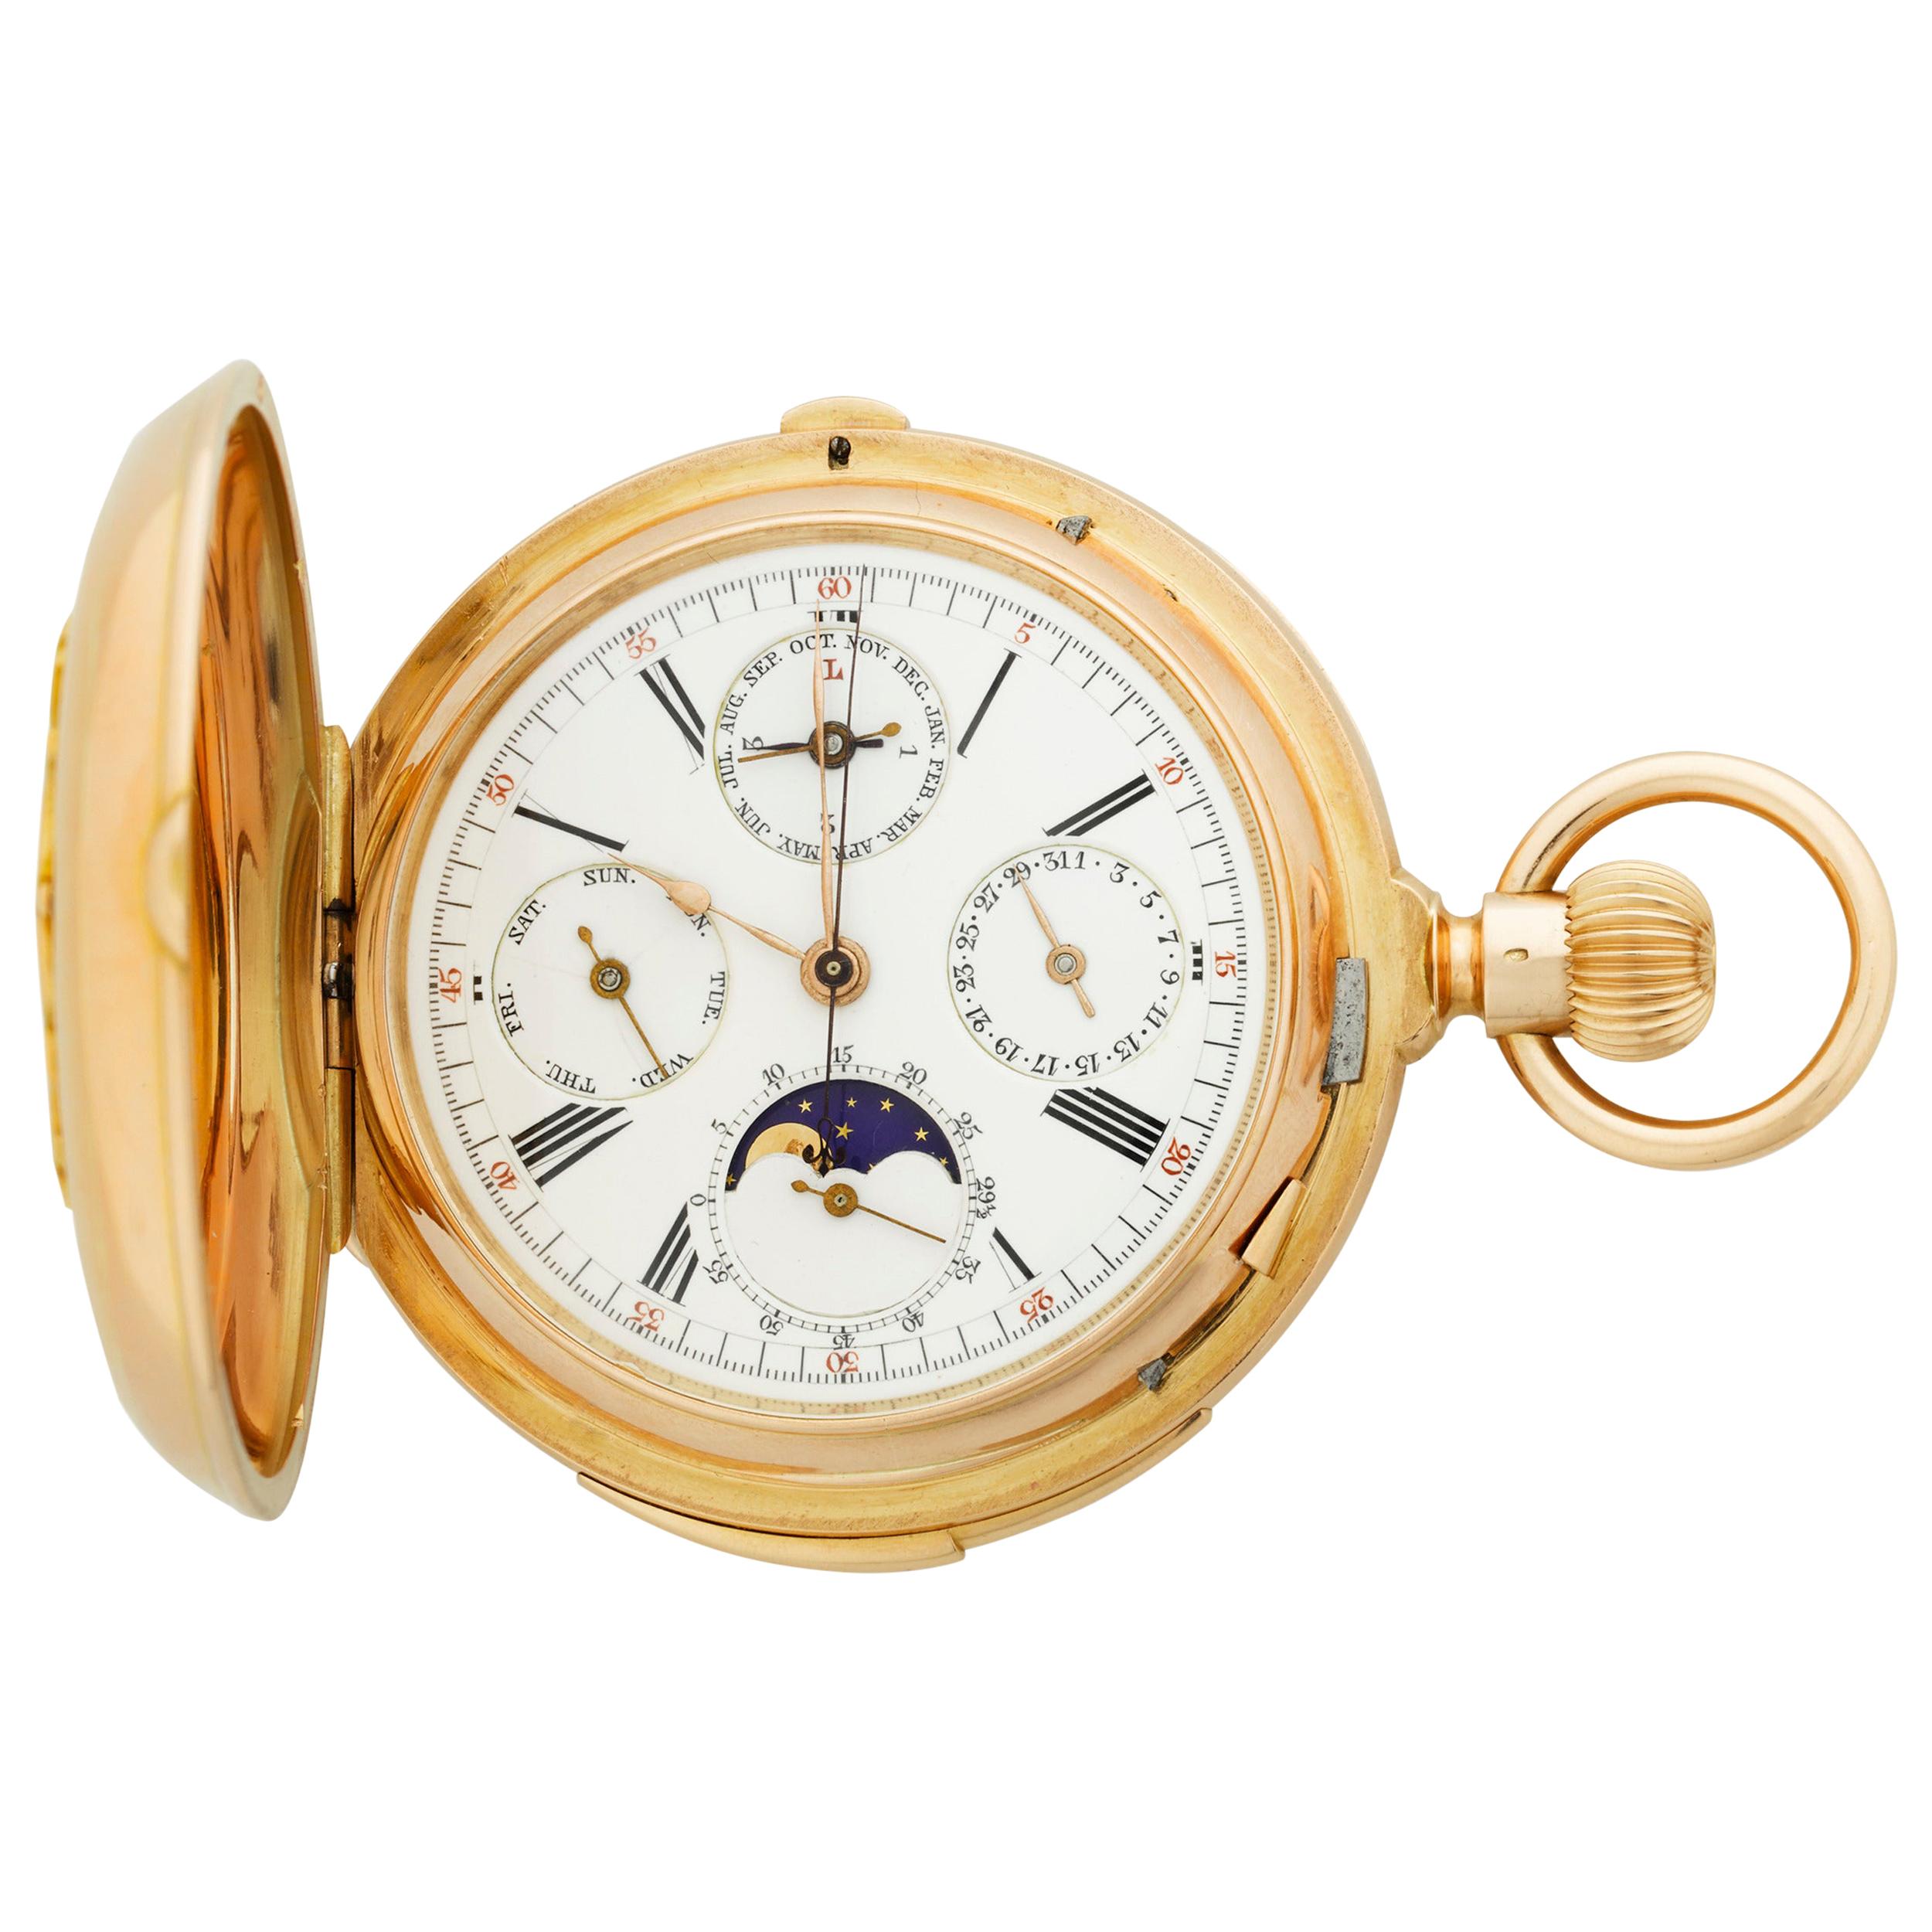 Perpetual Calendar Chronograph Pocket Watch by Redard & Co. For Sale